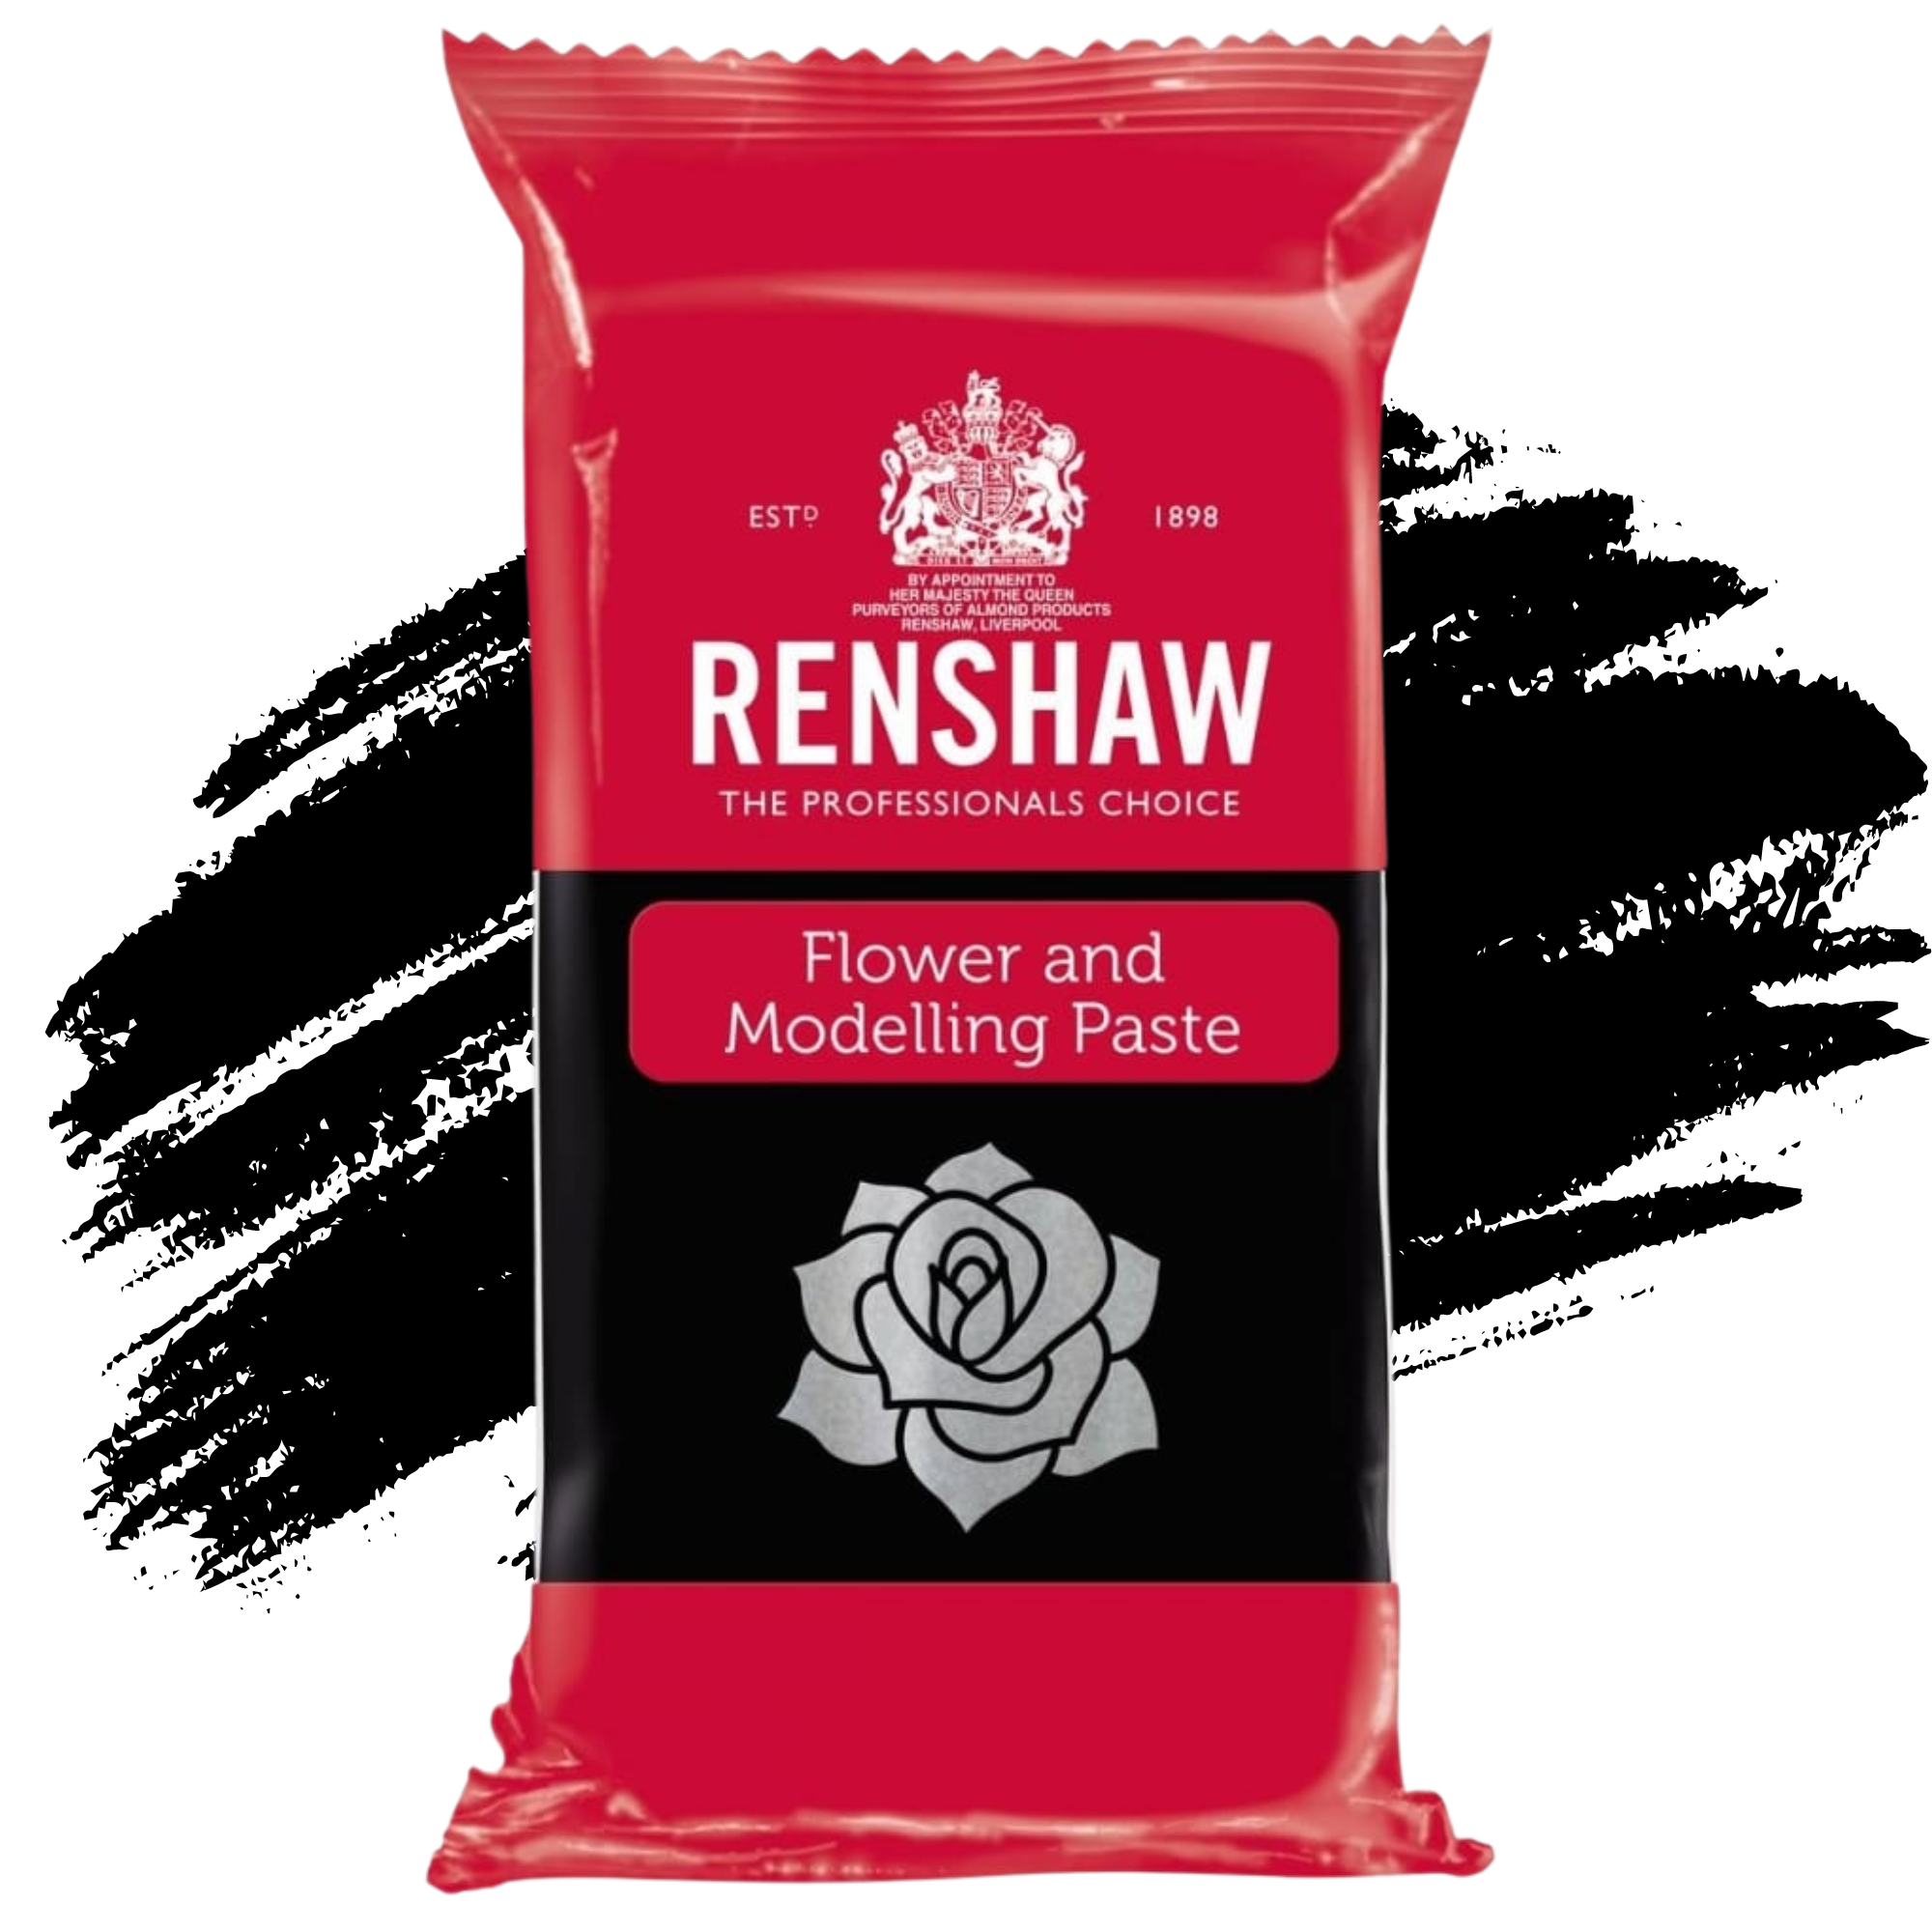 Renshaw Flower & Modelling Paste 250g Dahlia Black - Kate's Cupboard